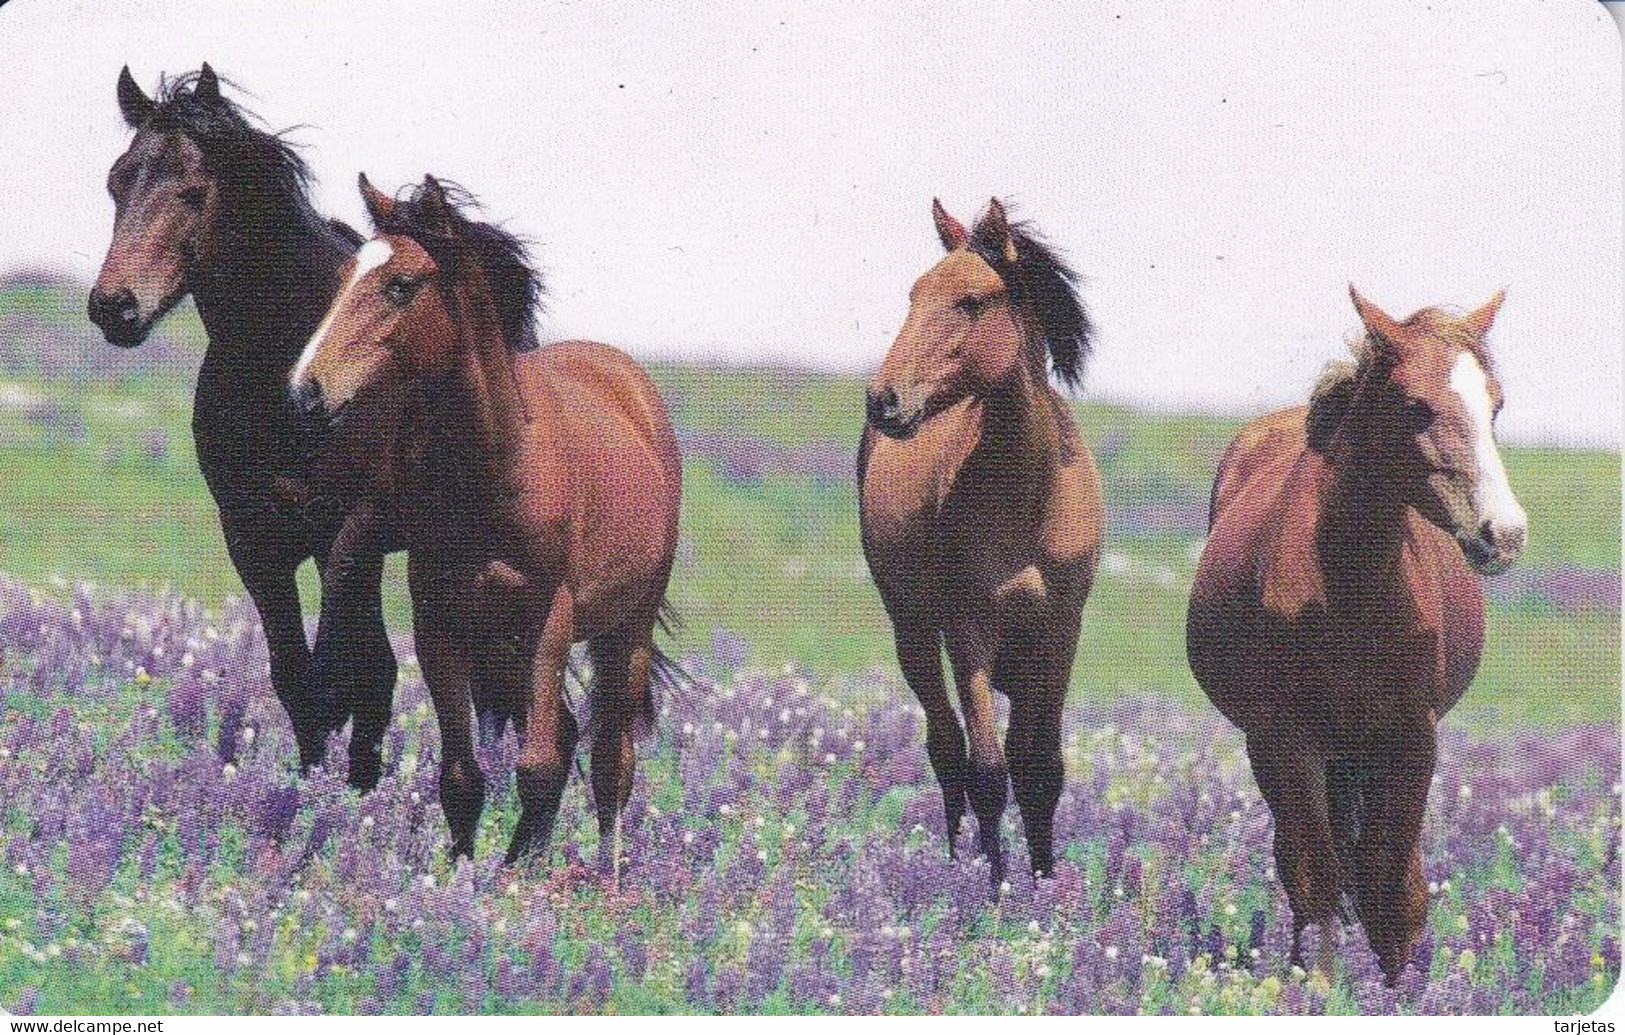 TARJETA DE ALEMANIA DE UNOS CABALLOS DE TIRADA 10000 (CABALLO-HORSE) - Pferde